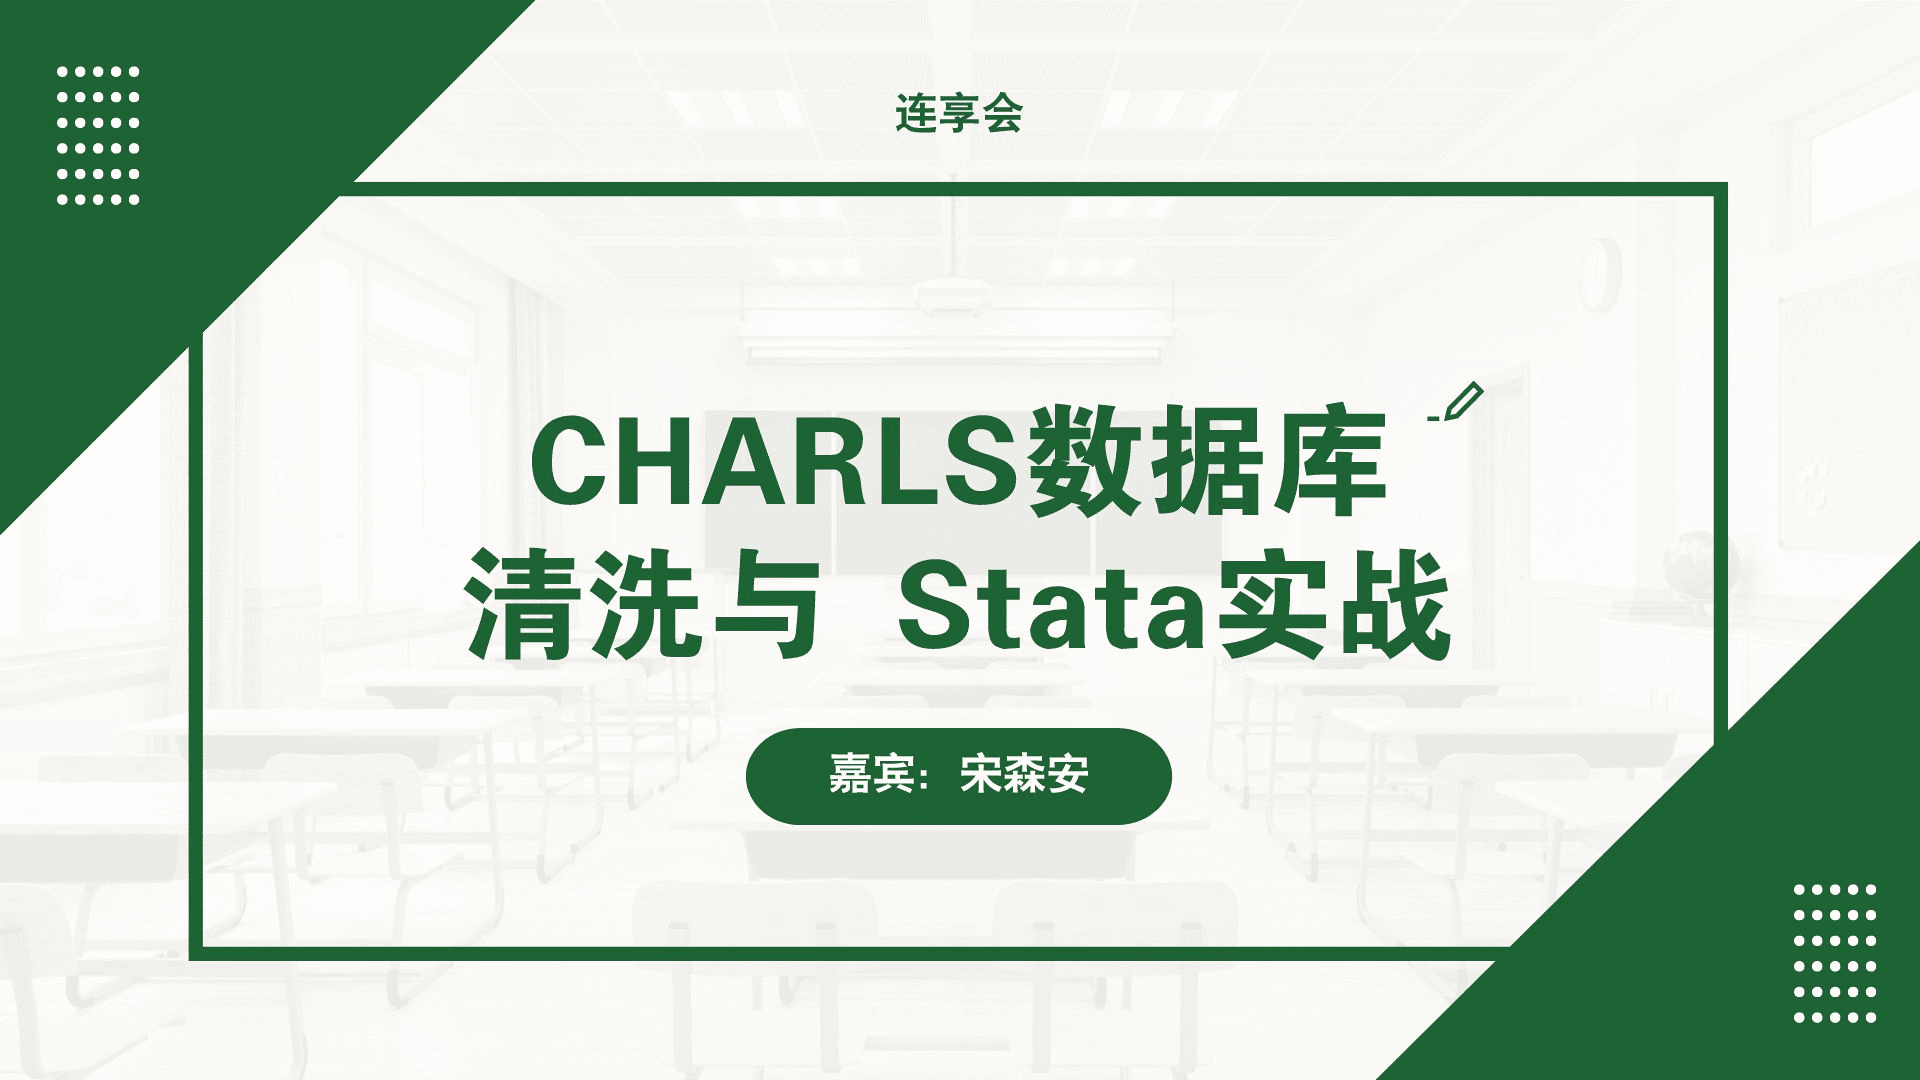 宋森安：CHARLS 数据库清洗与 Stata 实战